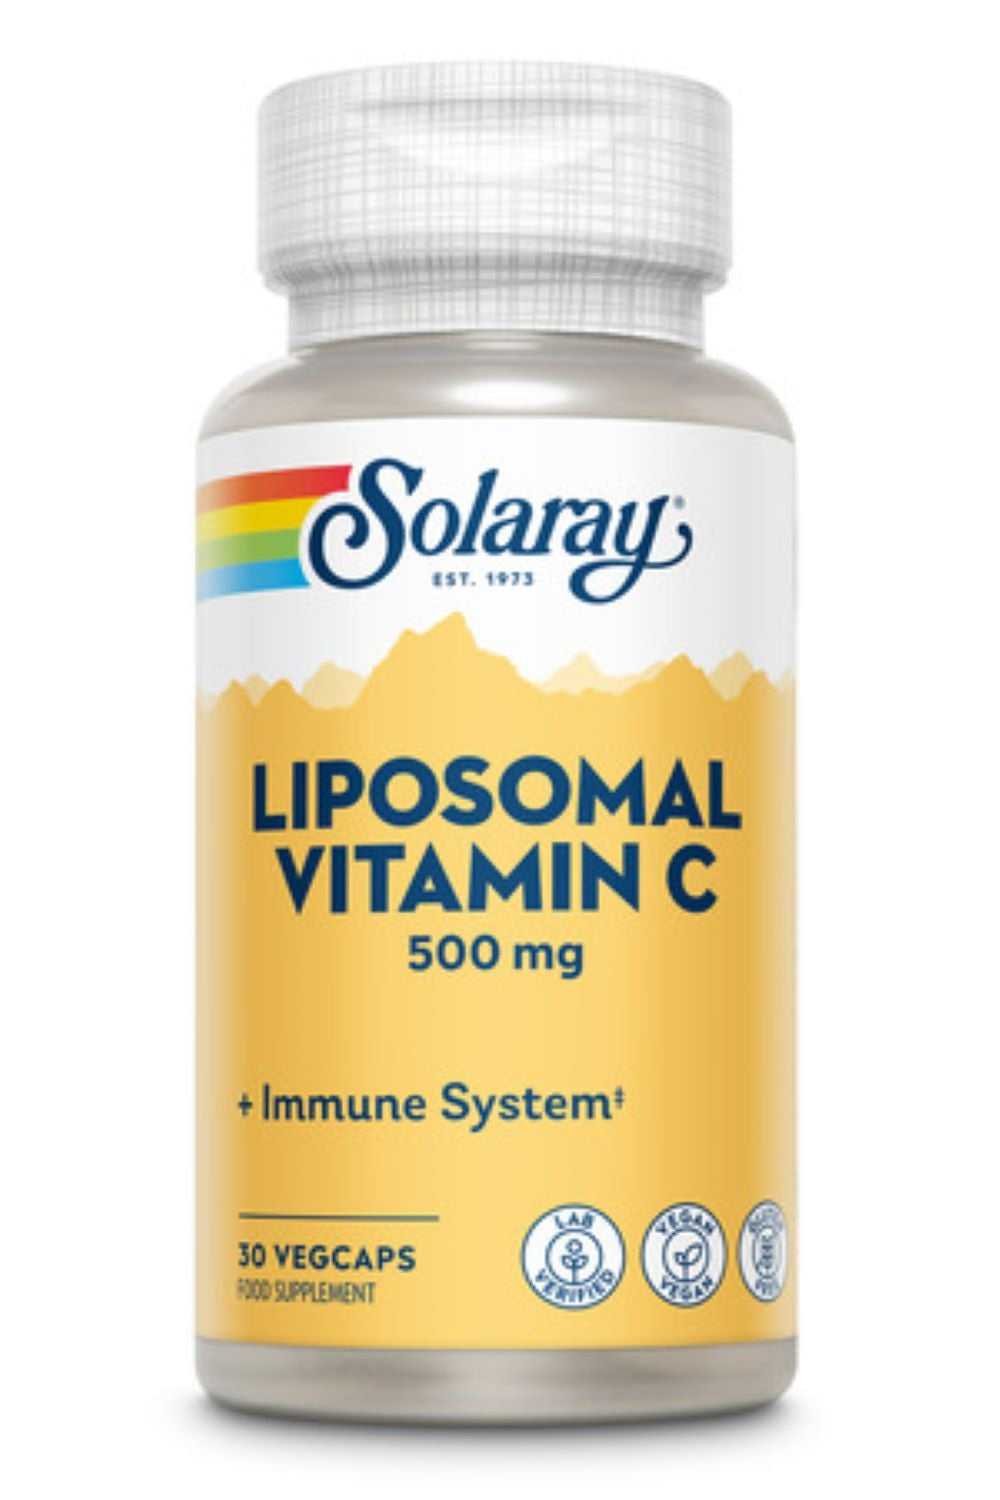 Solaray vitamina C liposomiale - 500 mg, 30 capsule veg